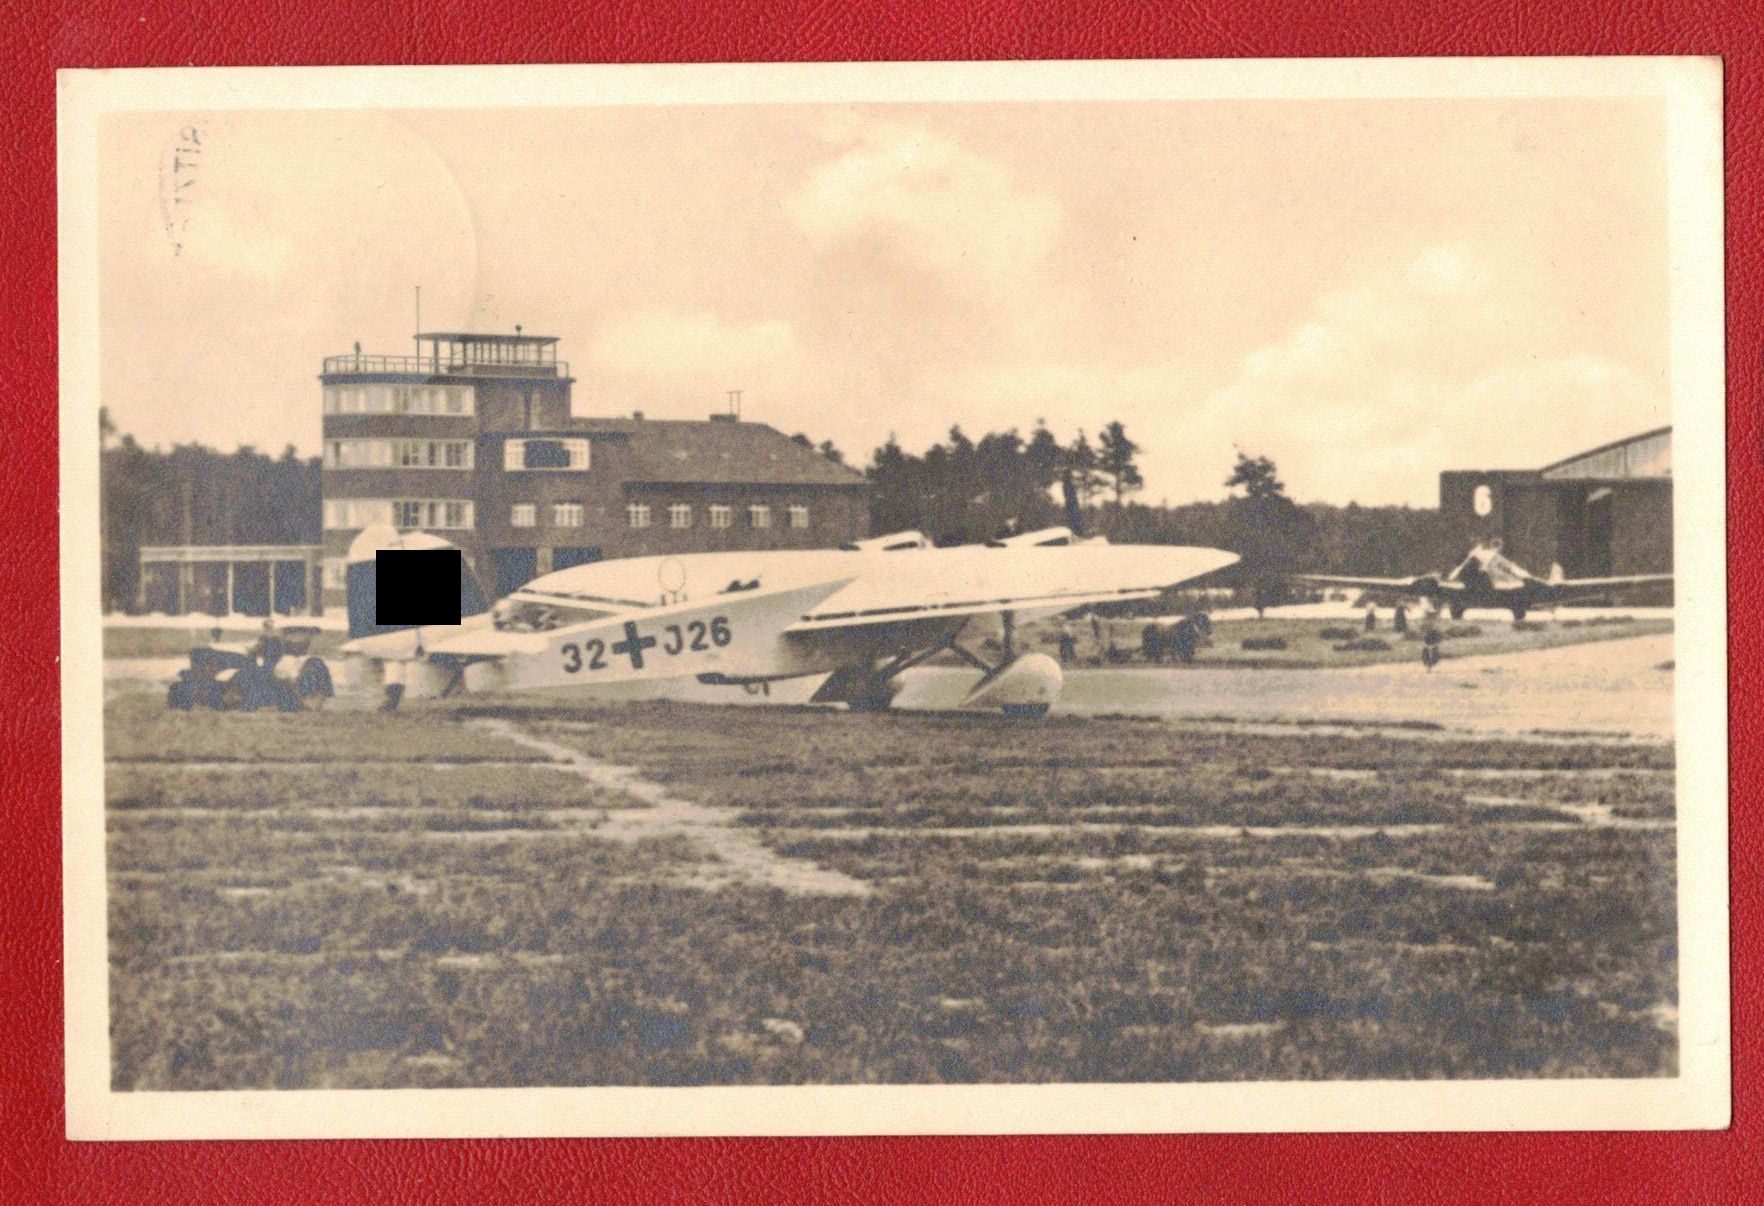 Ak Fliegerhorst Finsterwalde 1943 Feldpost Flugzeug 